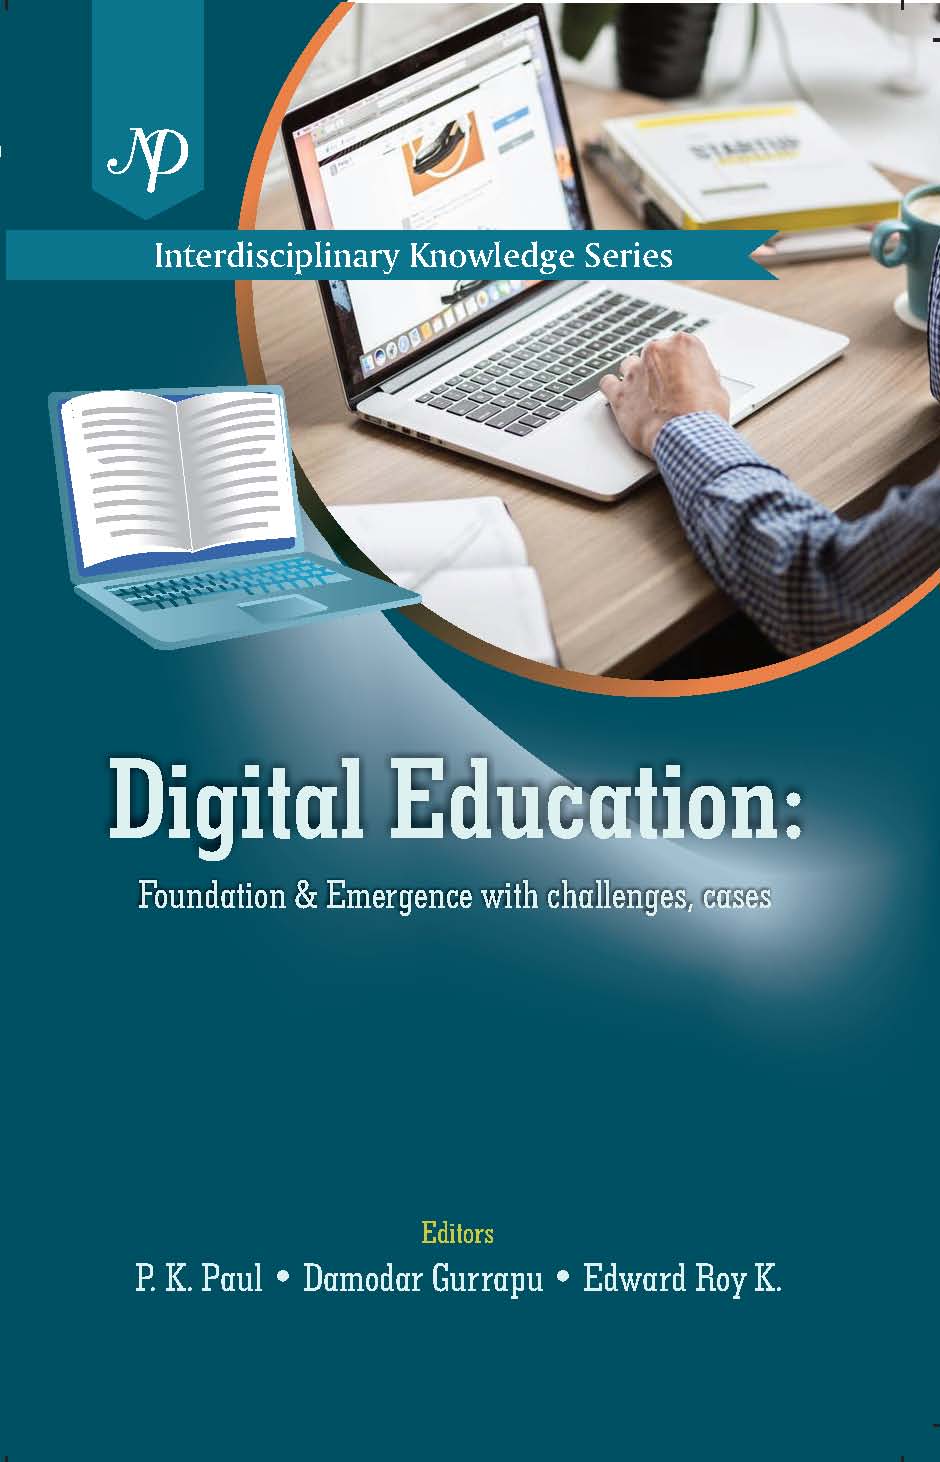 Digital Education-Foundation & Emergence Cover.jpg